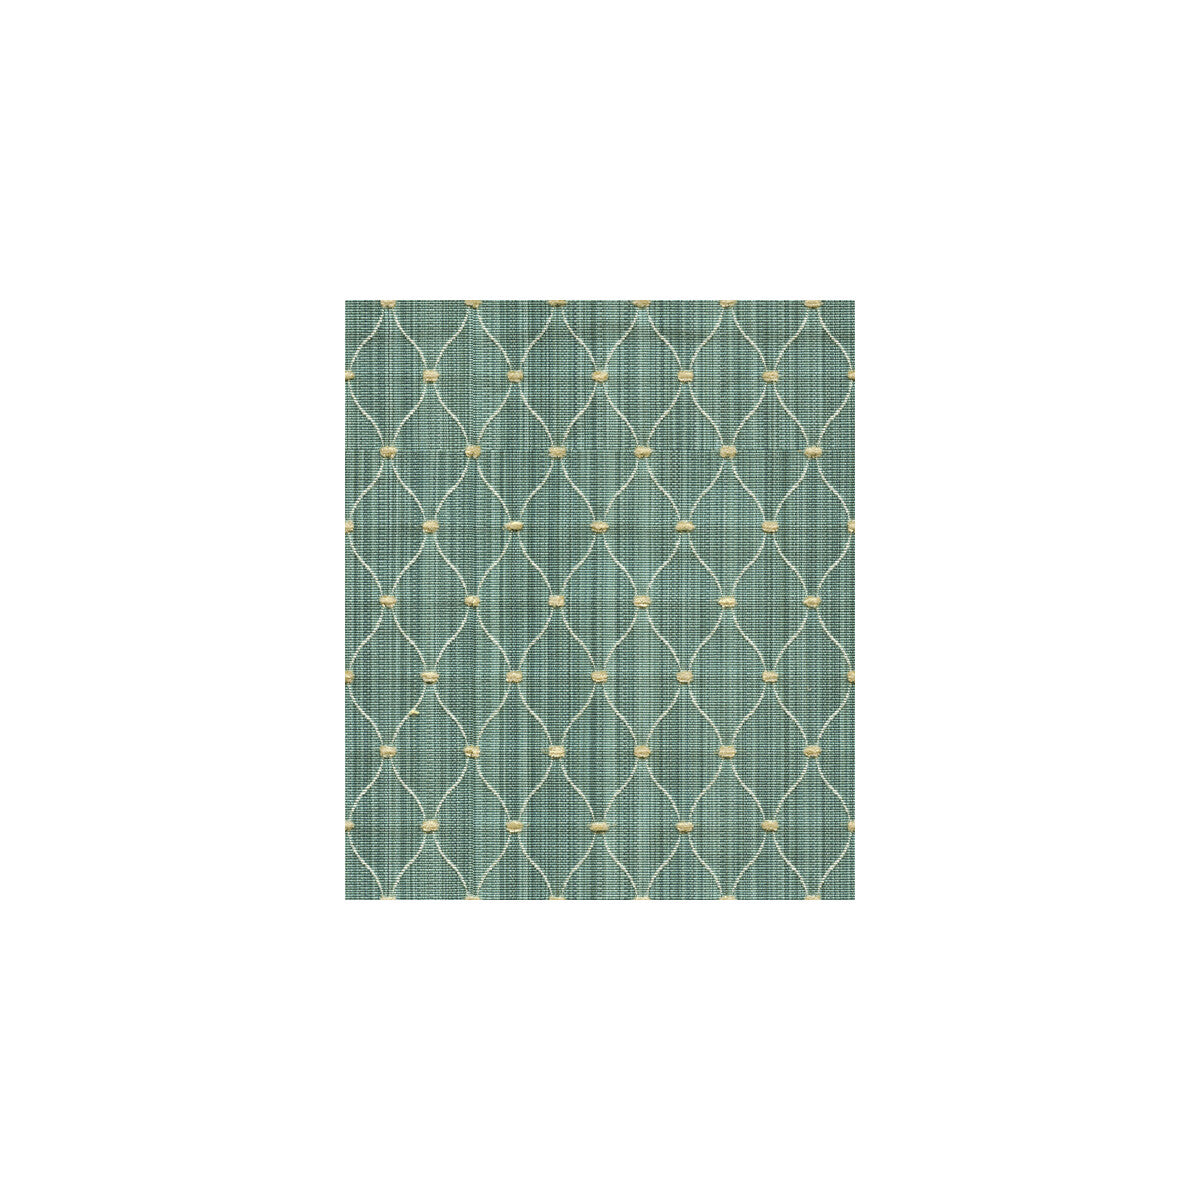 Kravet Smart fabric in 31137-35 color - pattern 31137.35.0 - by Kravet Smart